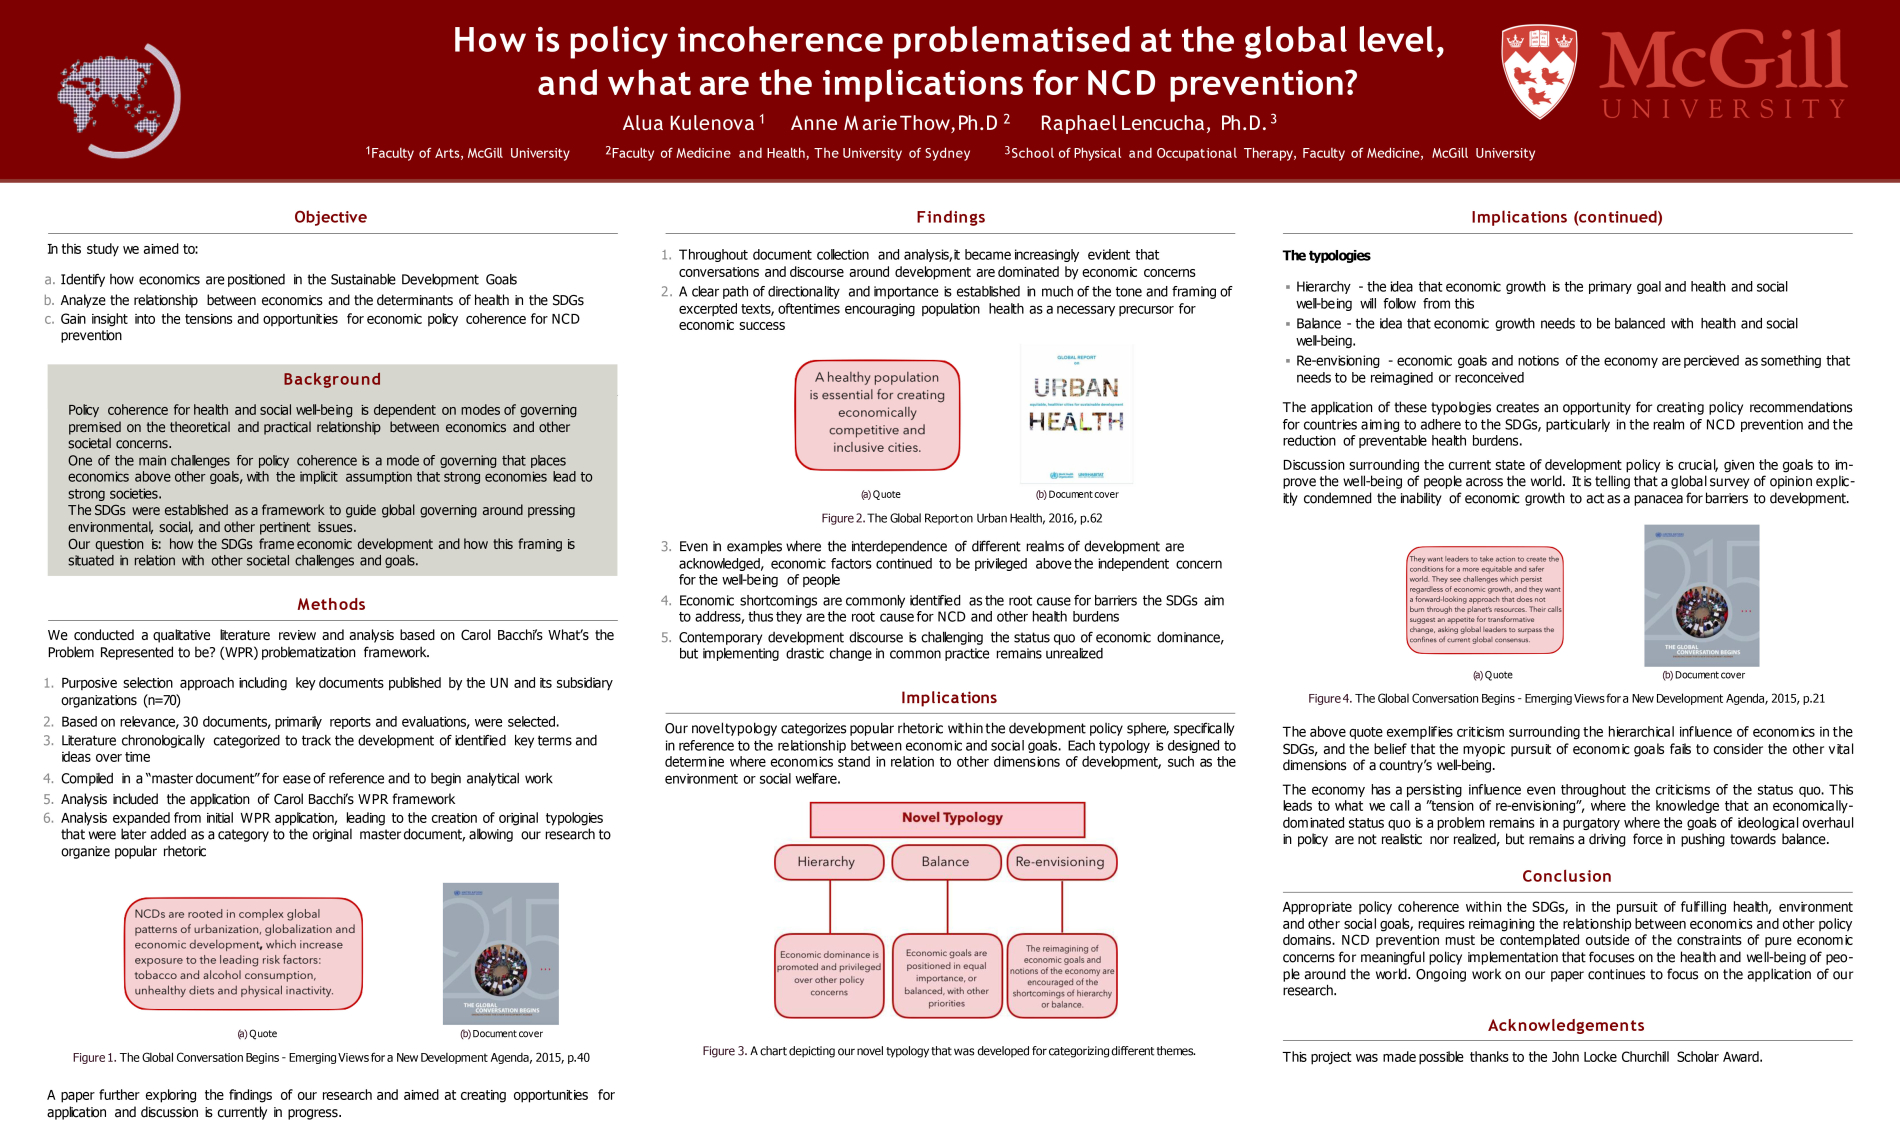 Overview of Alua Kulenova's Global Health Night poster